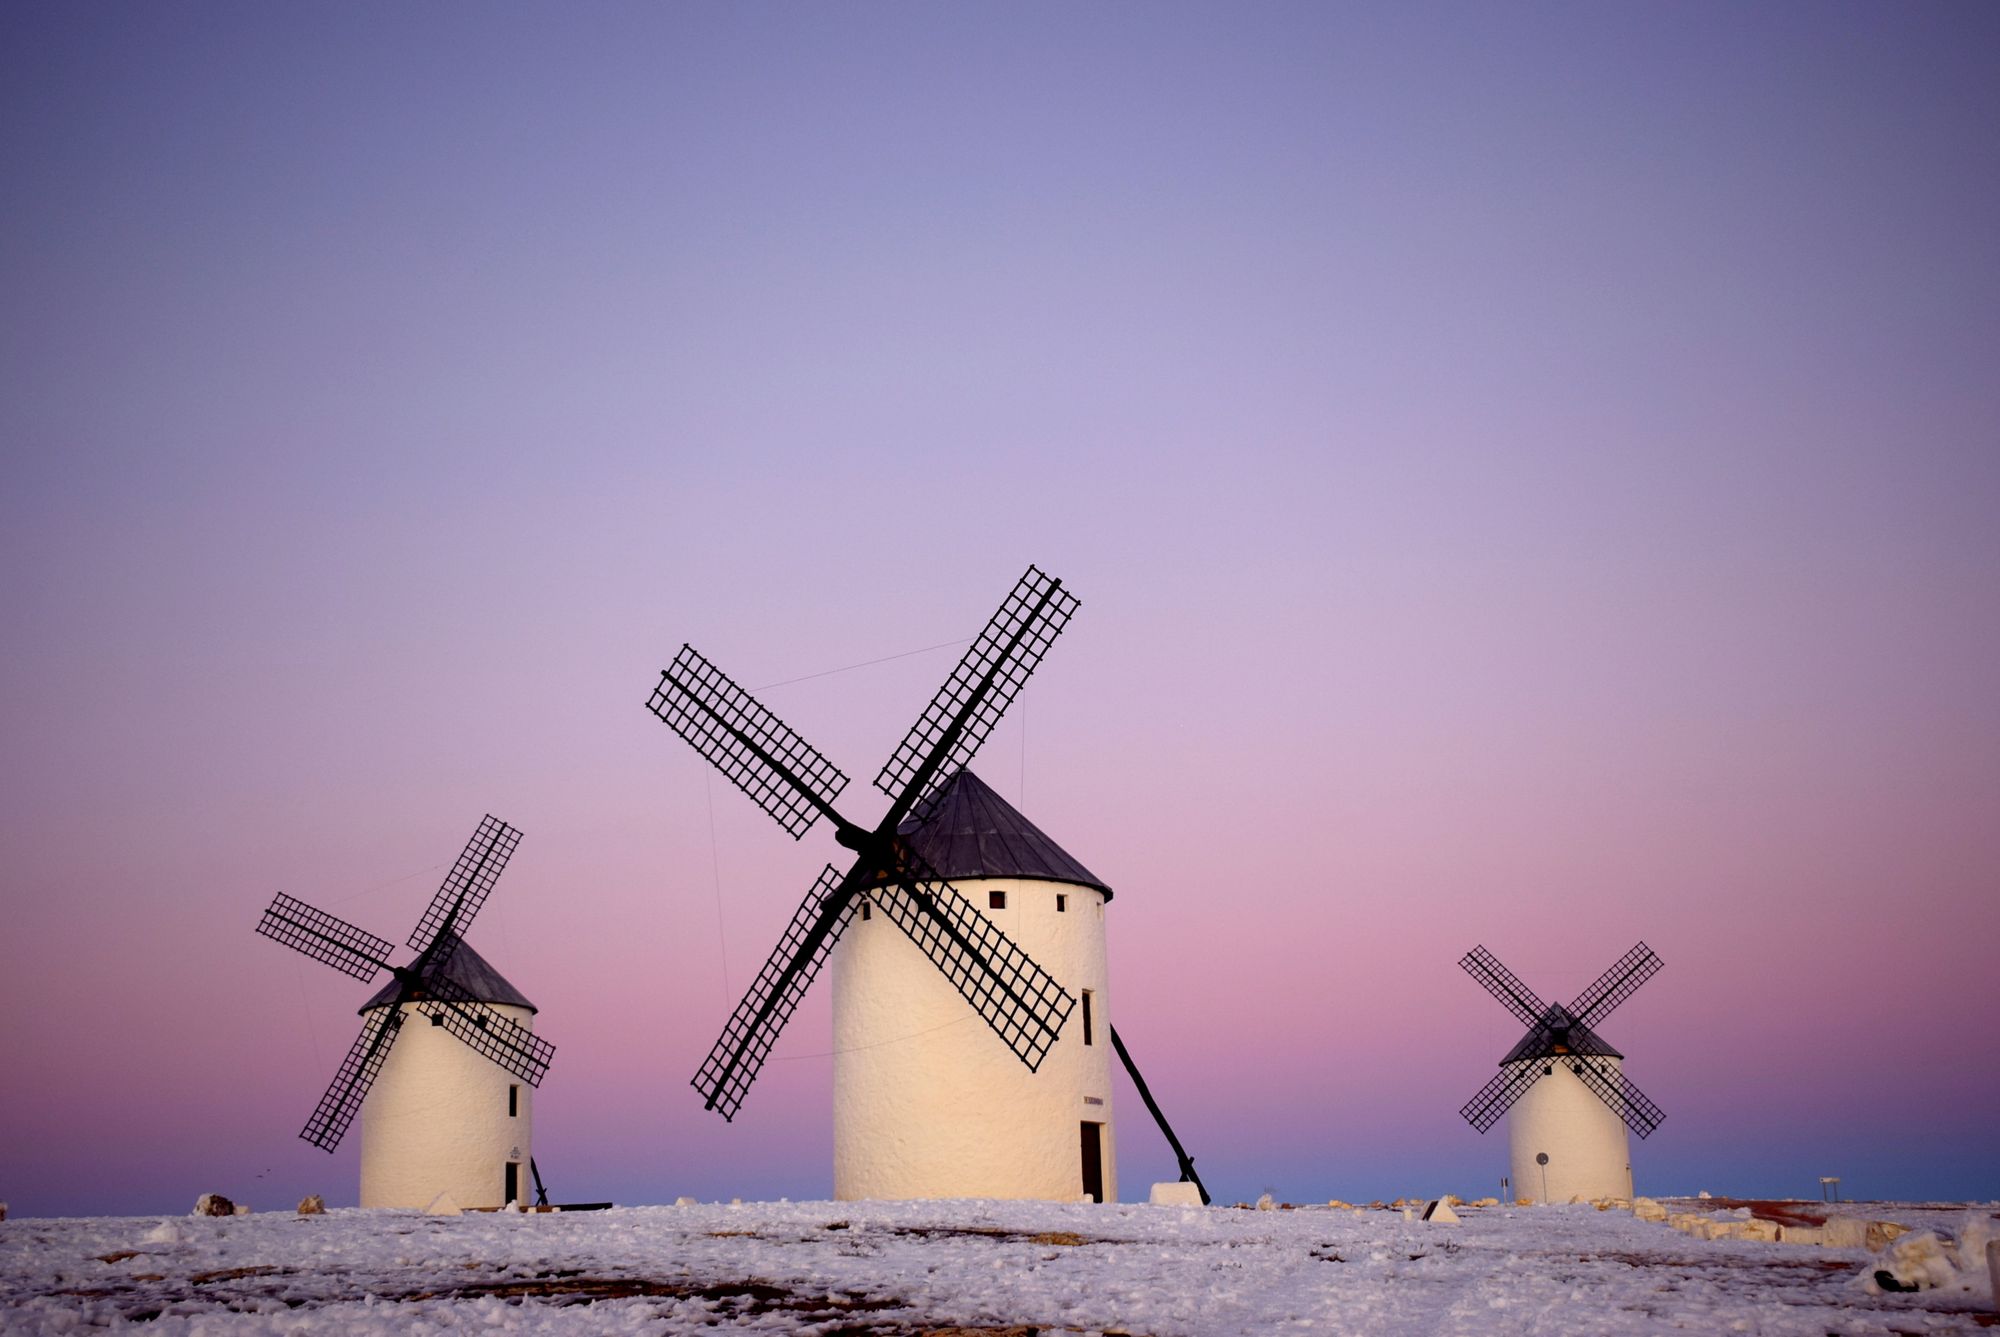 Three windmills against a purple sky